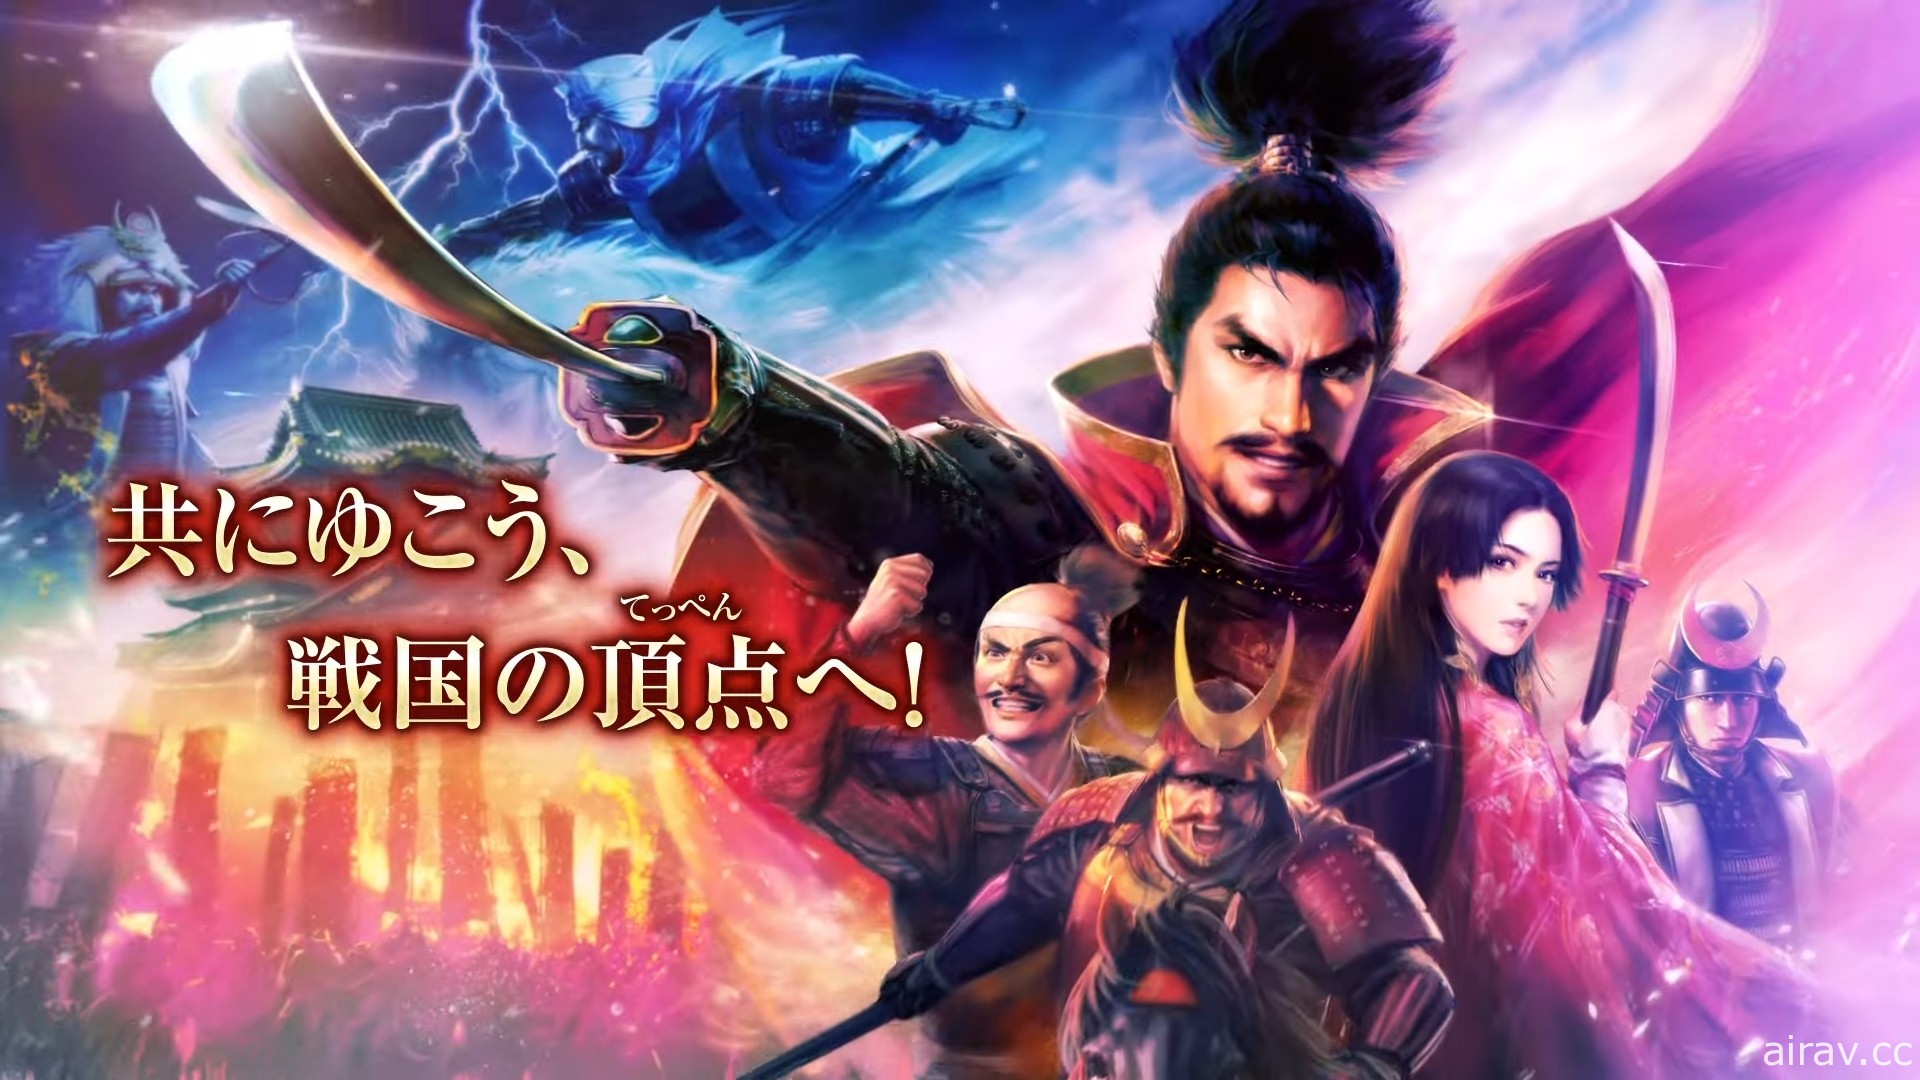 MMO 策略模拟游戏《信长之野望 霸道》亮相 即将于日本展开封闭测试